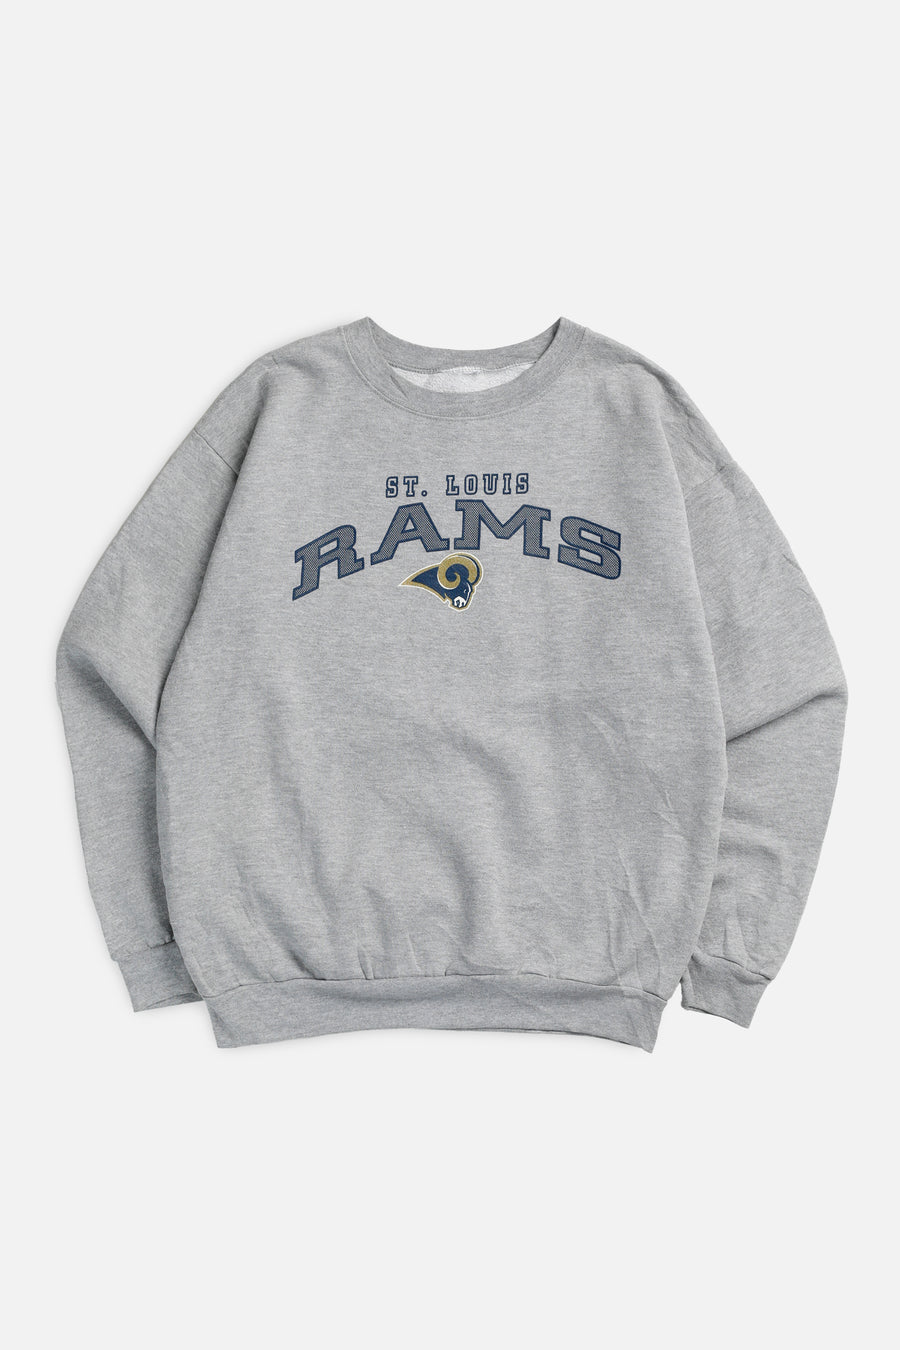 Vintage St. Louis Rams NFL Sweatshirt - L